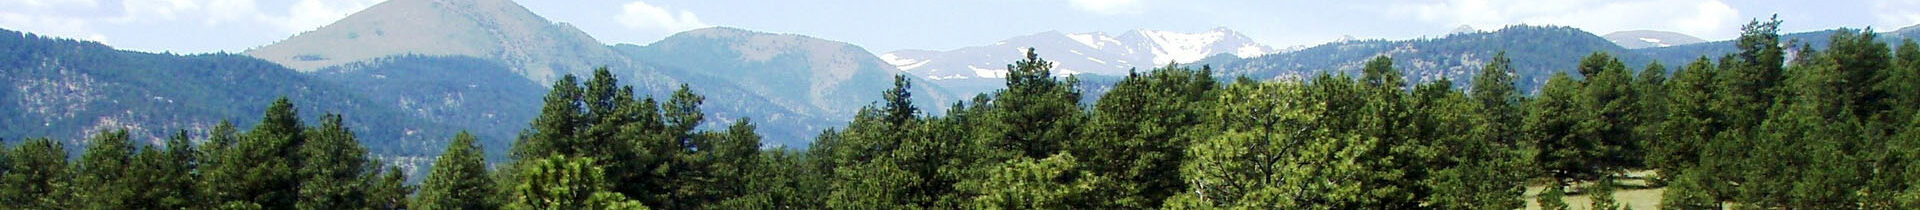 Mountain landscape looking west